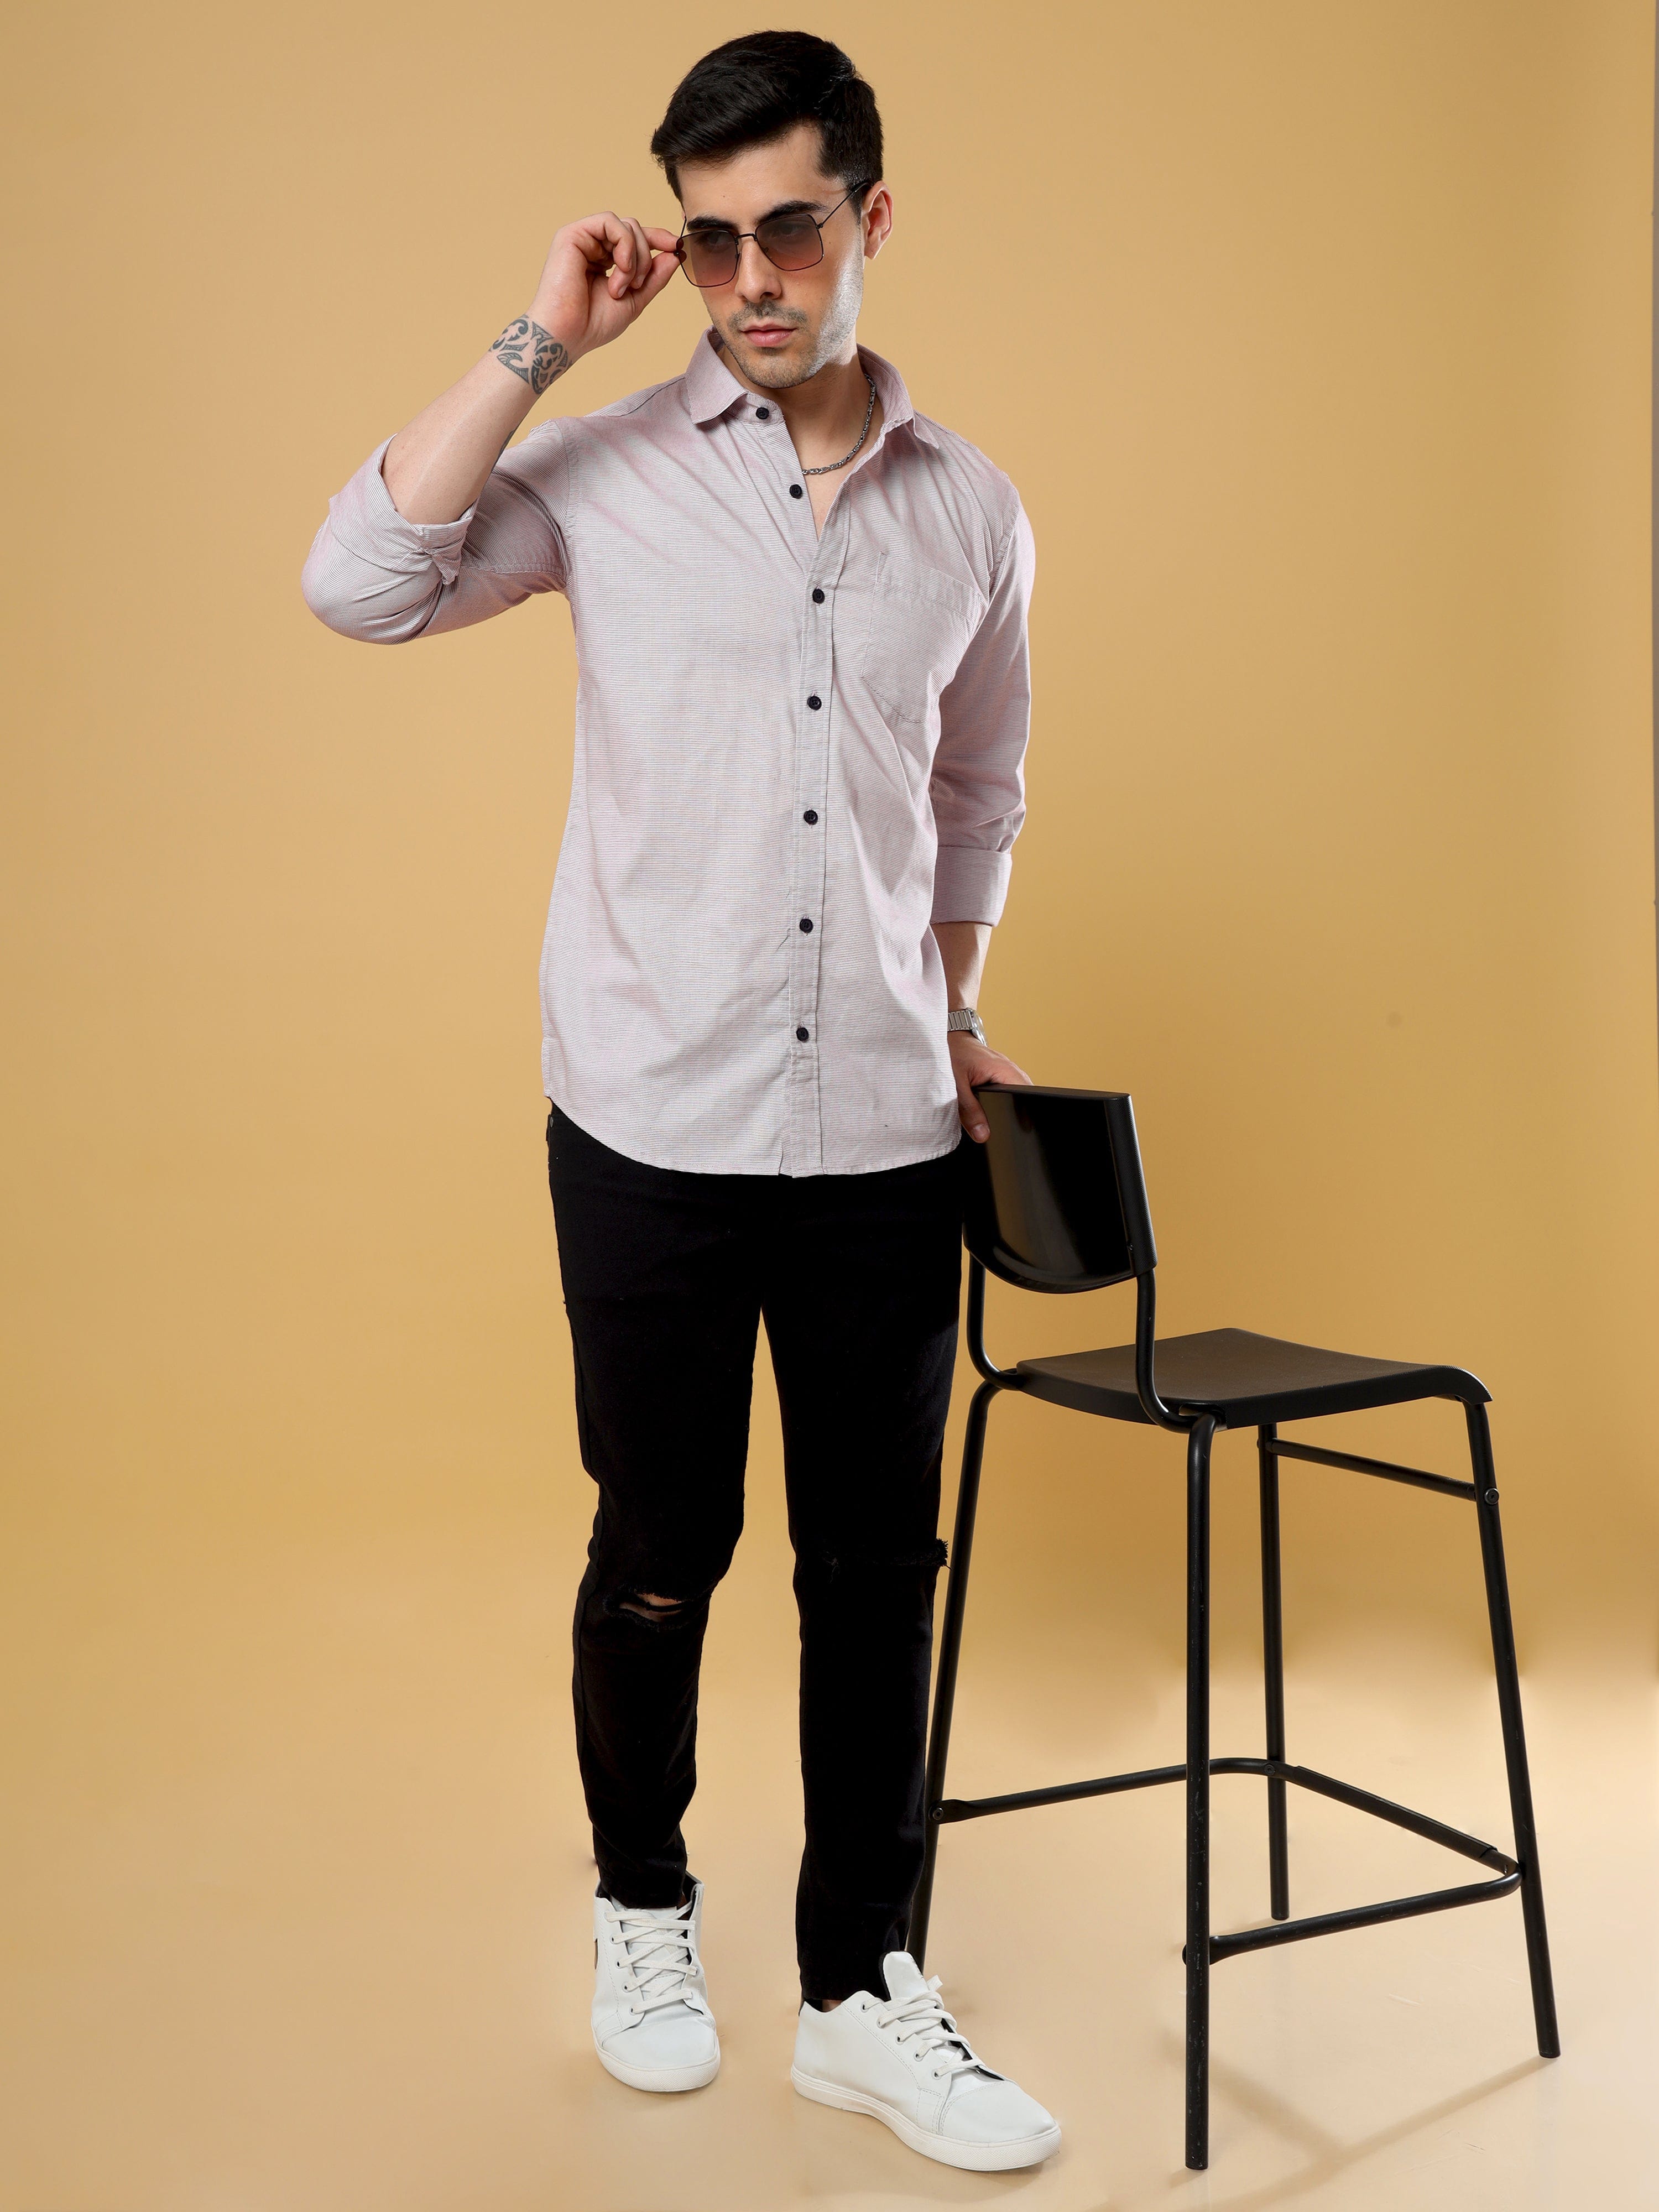 Textured Dobby Pin Checks Shirt | Men's Casual Shirts ChecksRs. 899.00